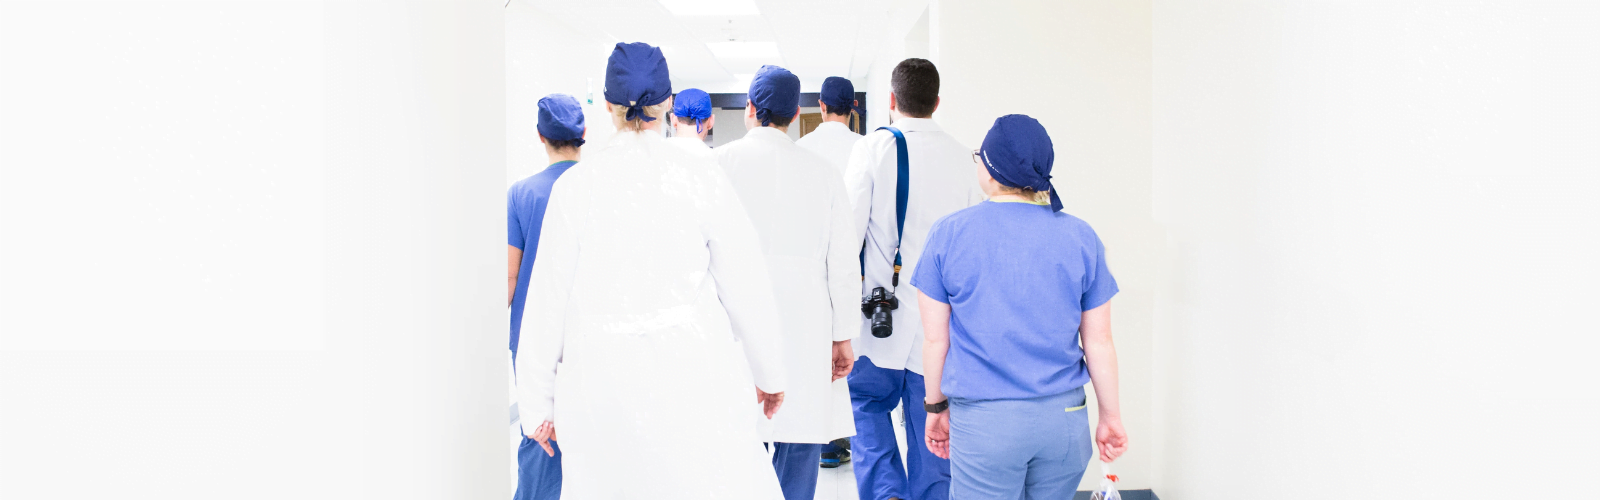 surgery center staff shortages